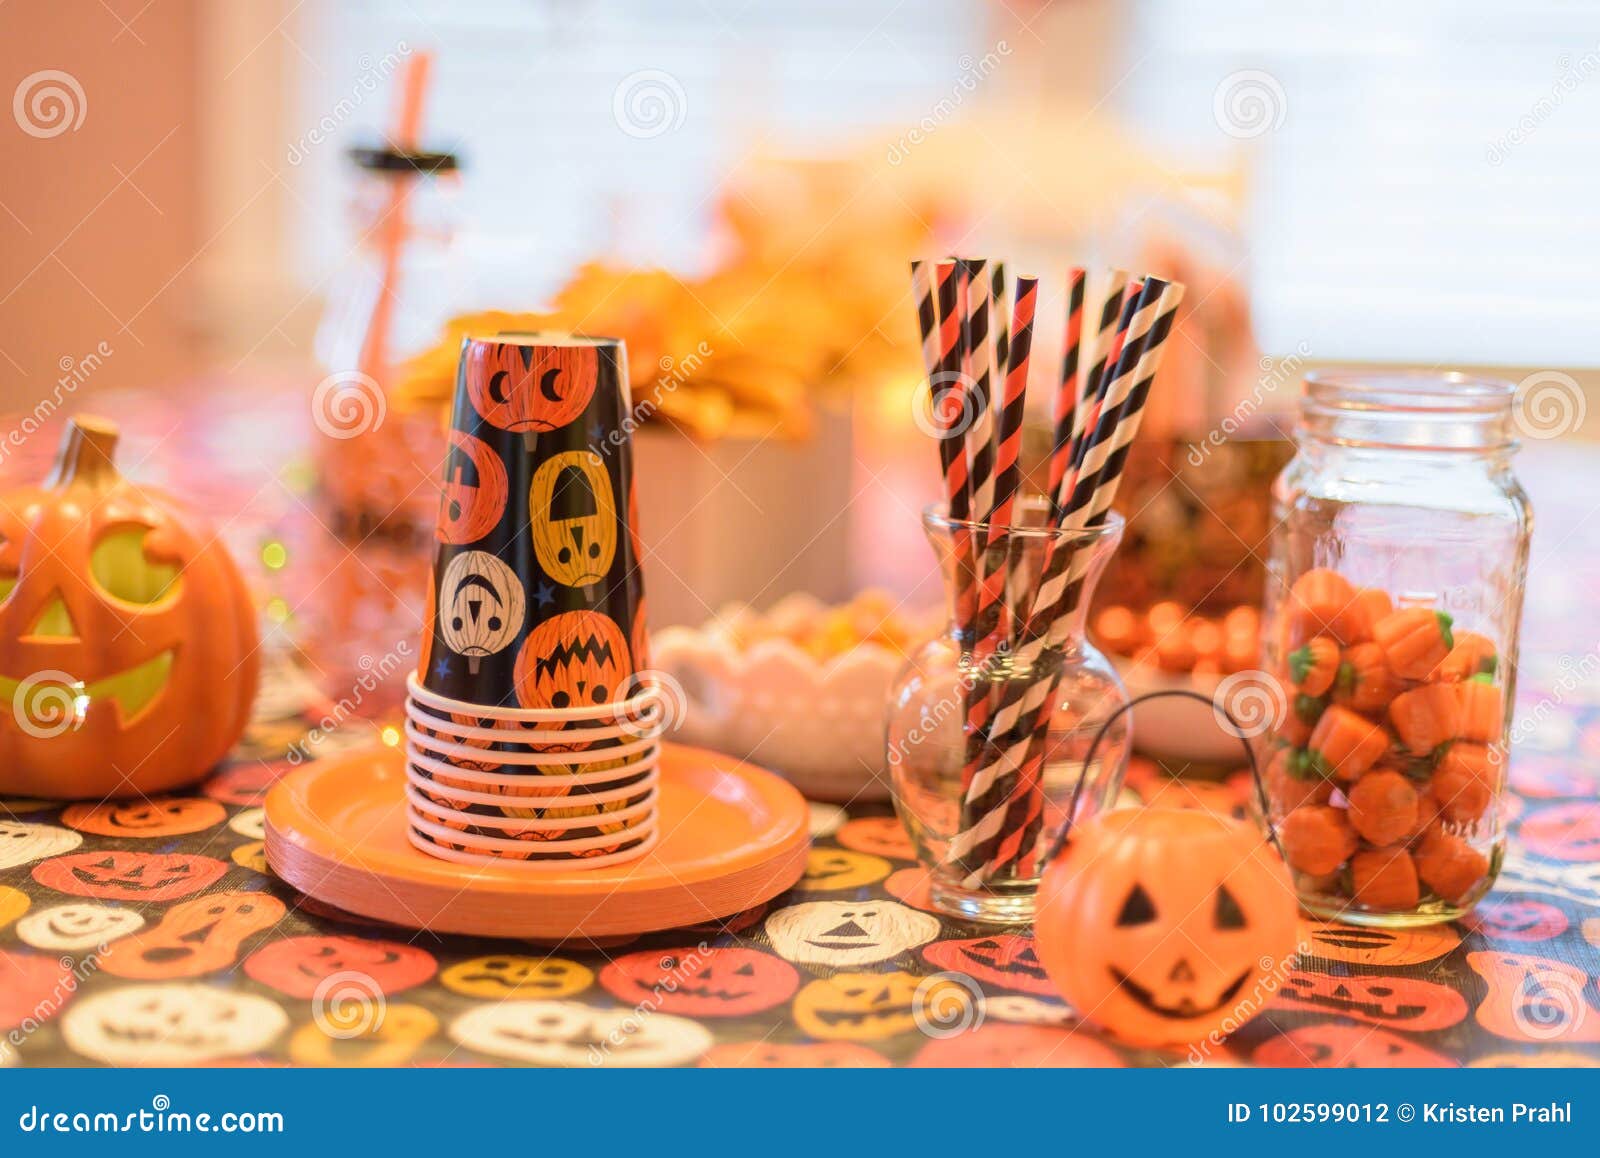 53 HQ Photos Christian Halloween Decorations - 9 Halloween Ideas For Christians Matthew Paul Turner